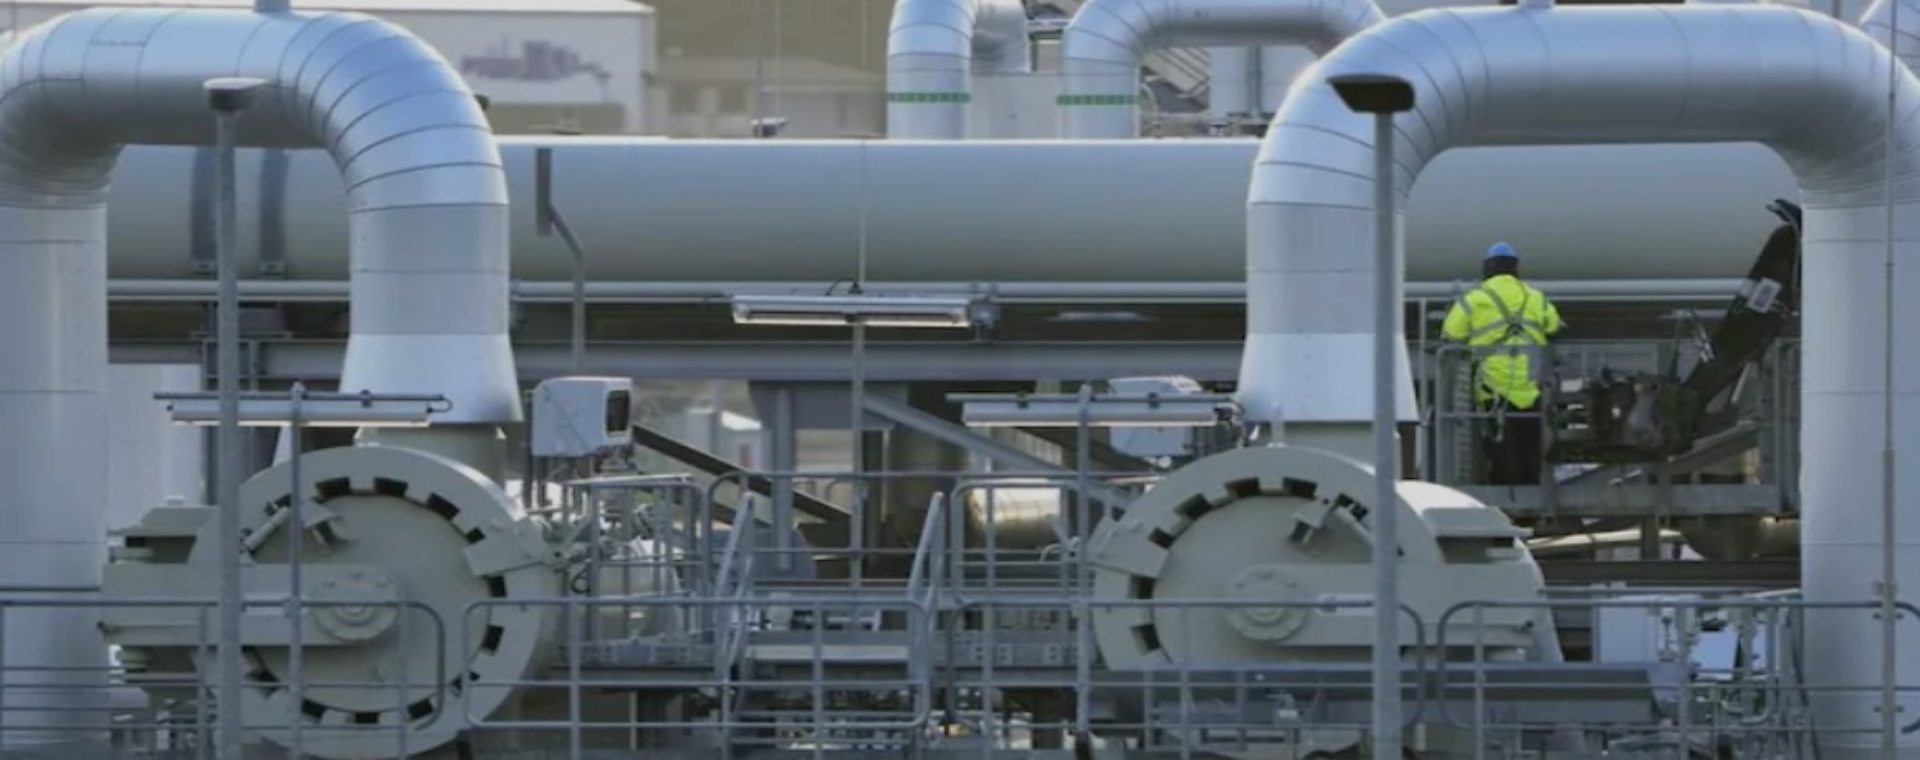 Jaringan pipa gas Nord Stream 2. Jerman mencurigai sistem pipa gas Nord Stream 2 dirusak oleh tindakan sabotase. Dugaan ini menjadi eskalasi besar dalam konflik antara Rusia dan Eropa. Dilansir Bloomberg pada Rabu (28/9/2022), seorang pejabat keamanan Jerman mengatakan bukti mengarah kepada temuan tindakan sabotase terhadap pipa gas daripada masalah teknis. - Istimewa